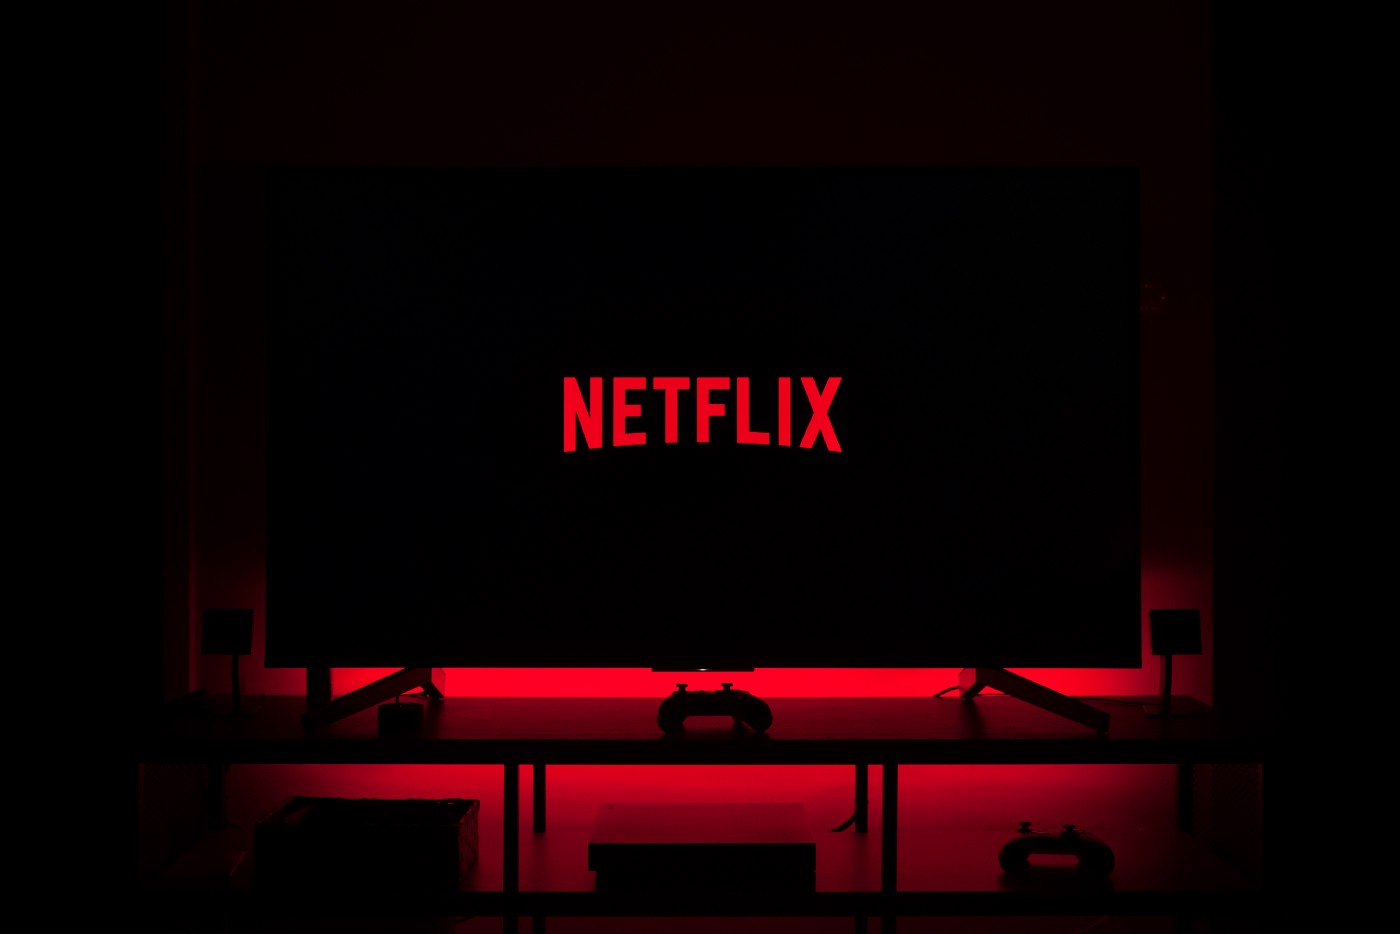 Netflix loses subscribers